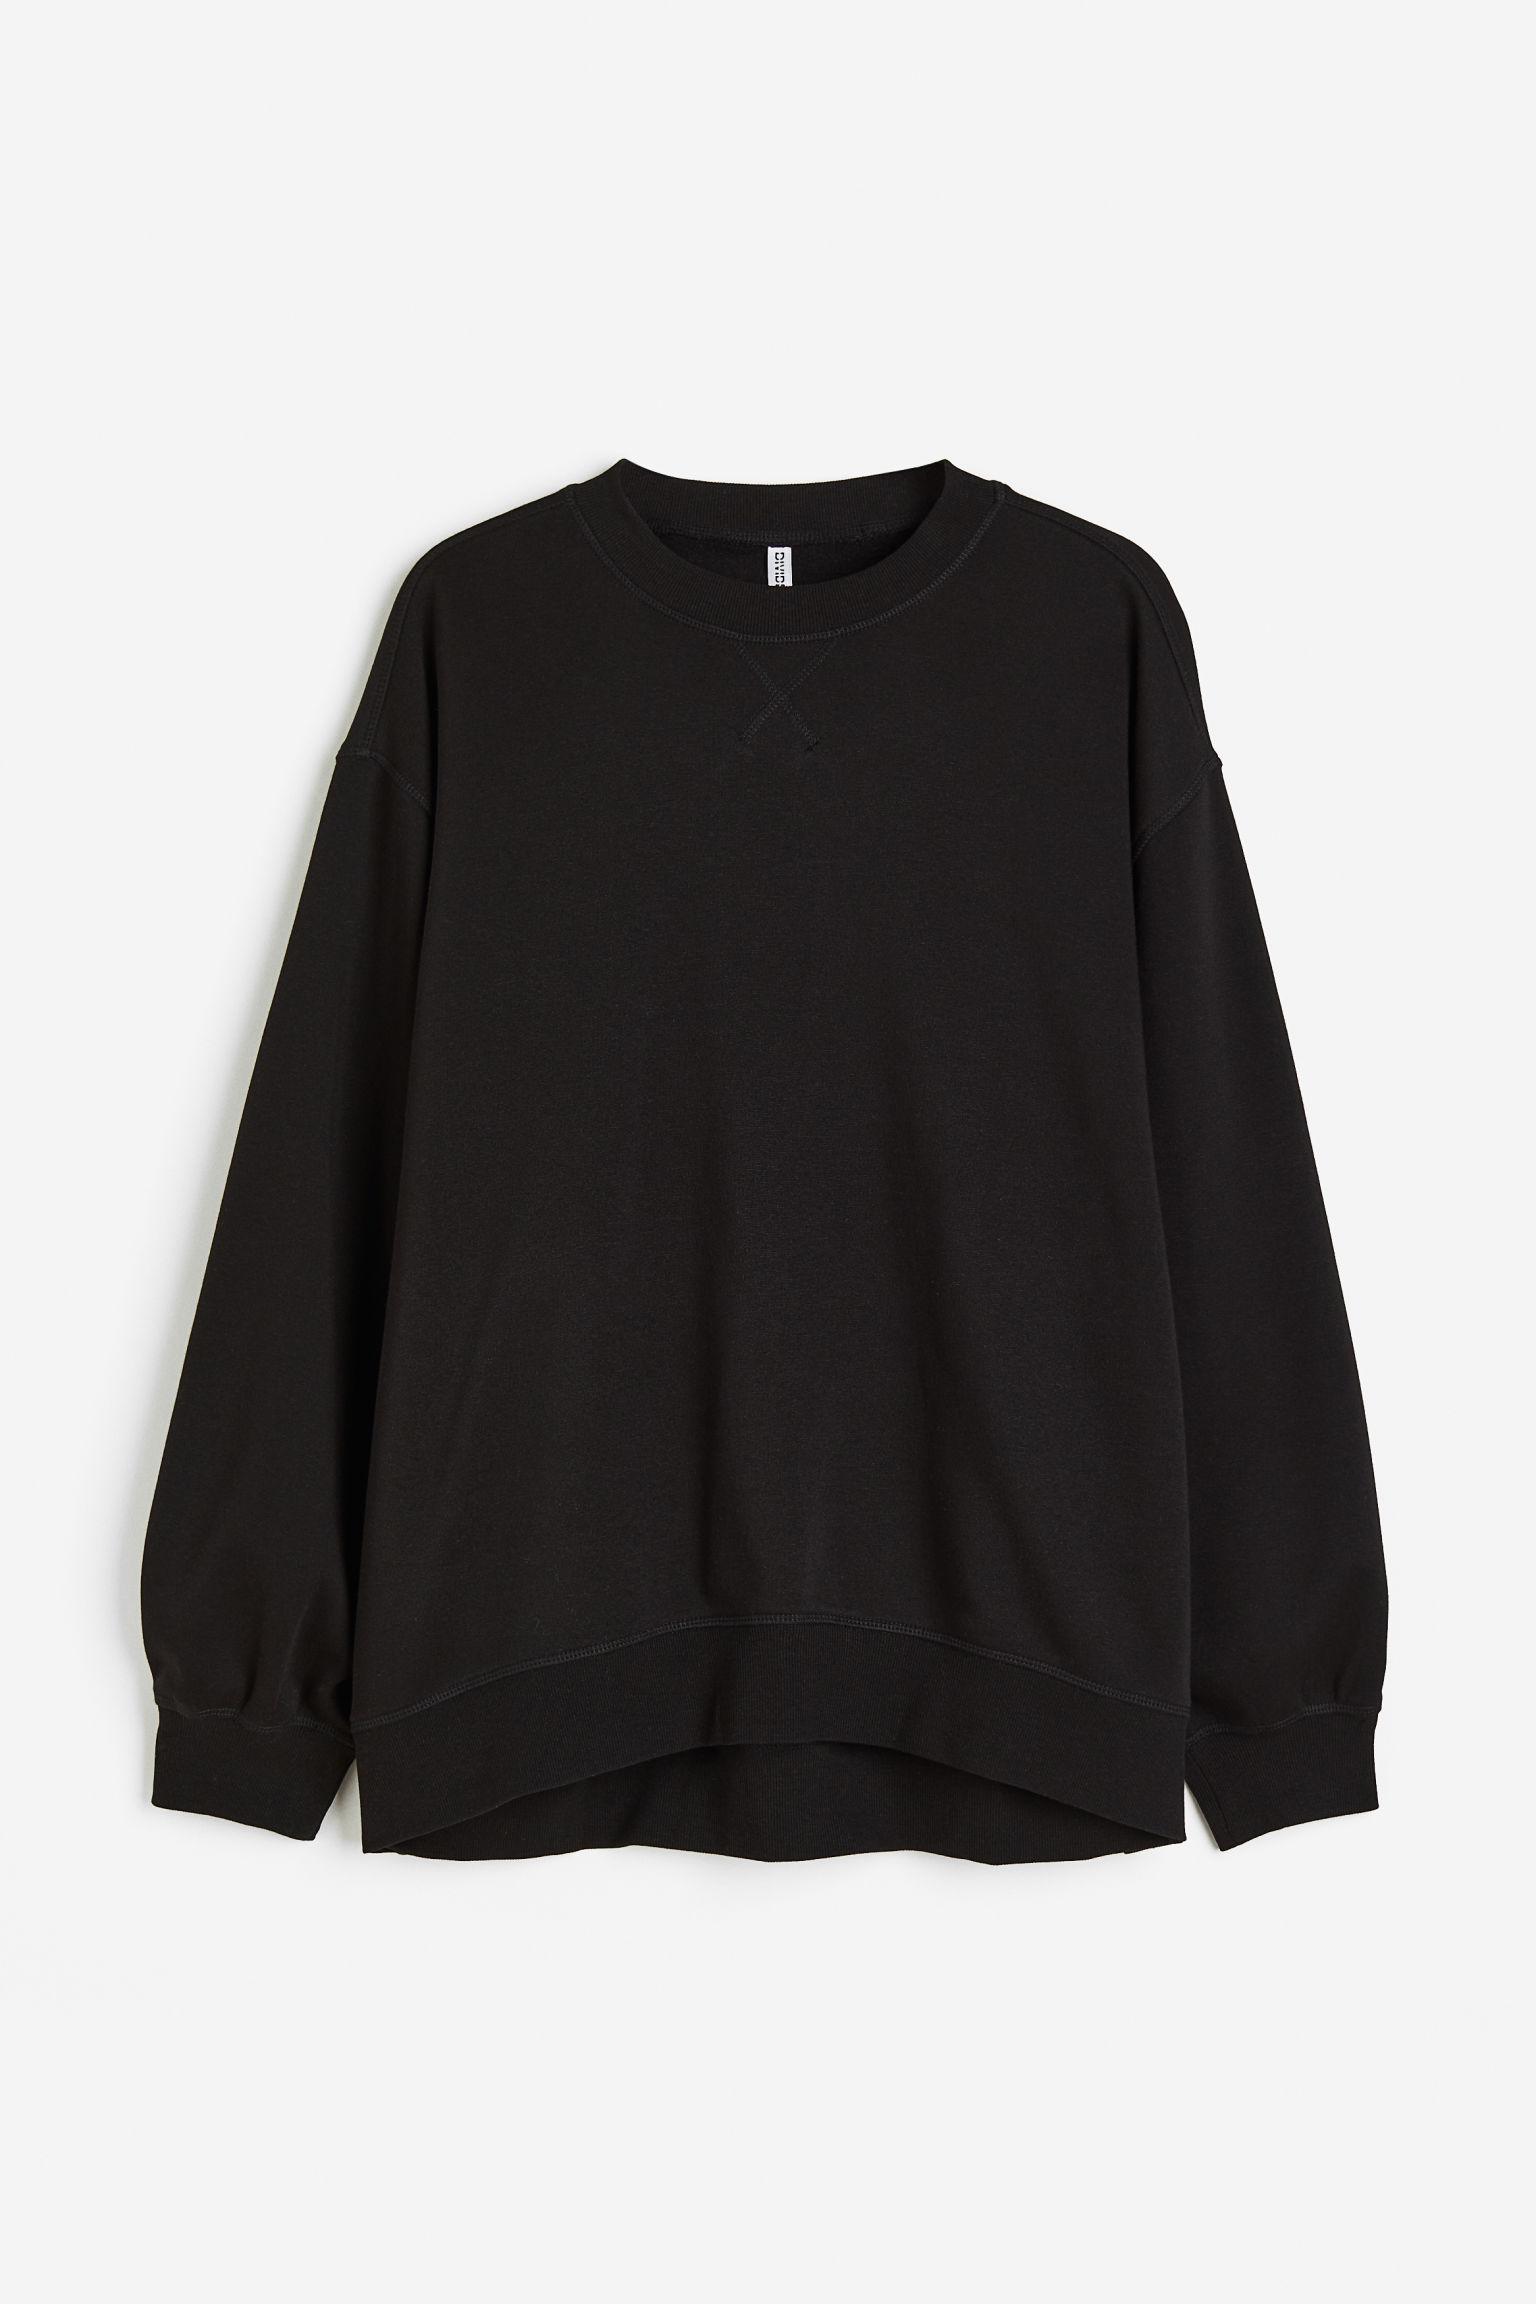 H&M H & M+ Oversized Sweatshirt in Black | Lyst UK